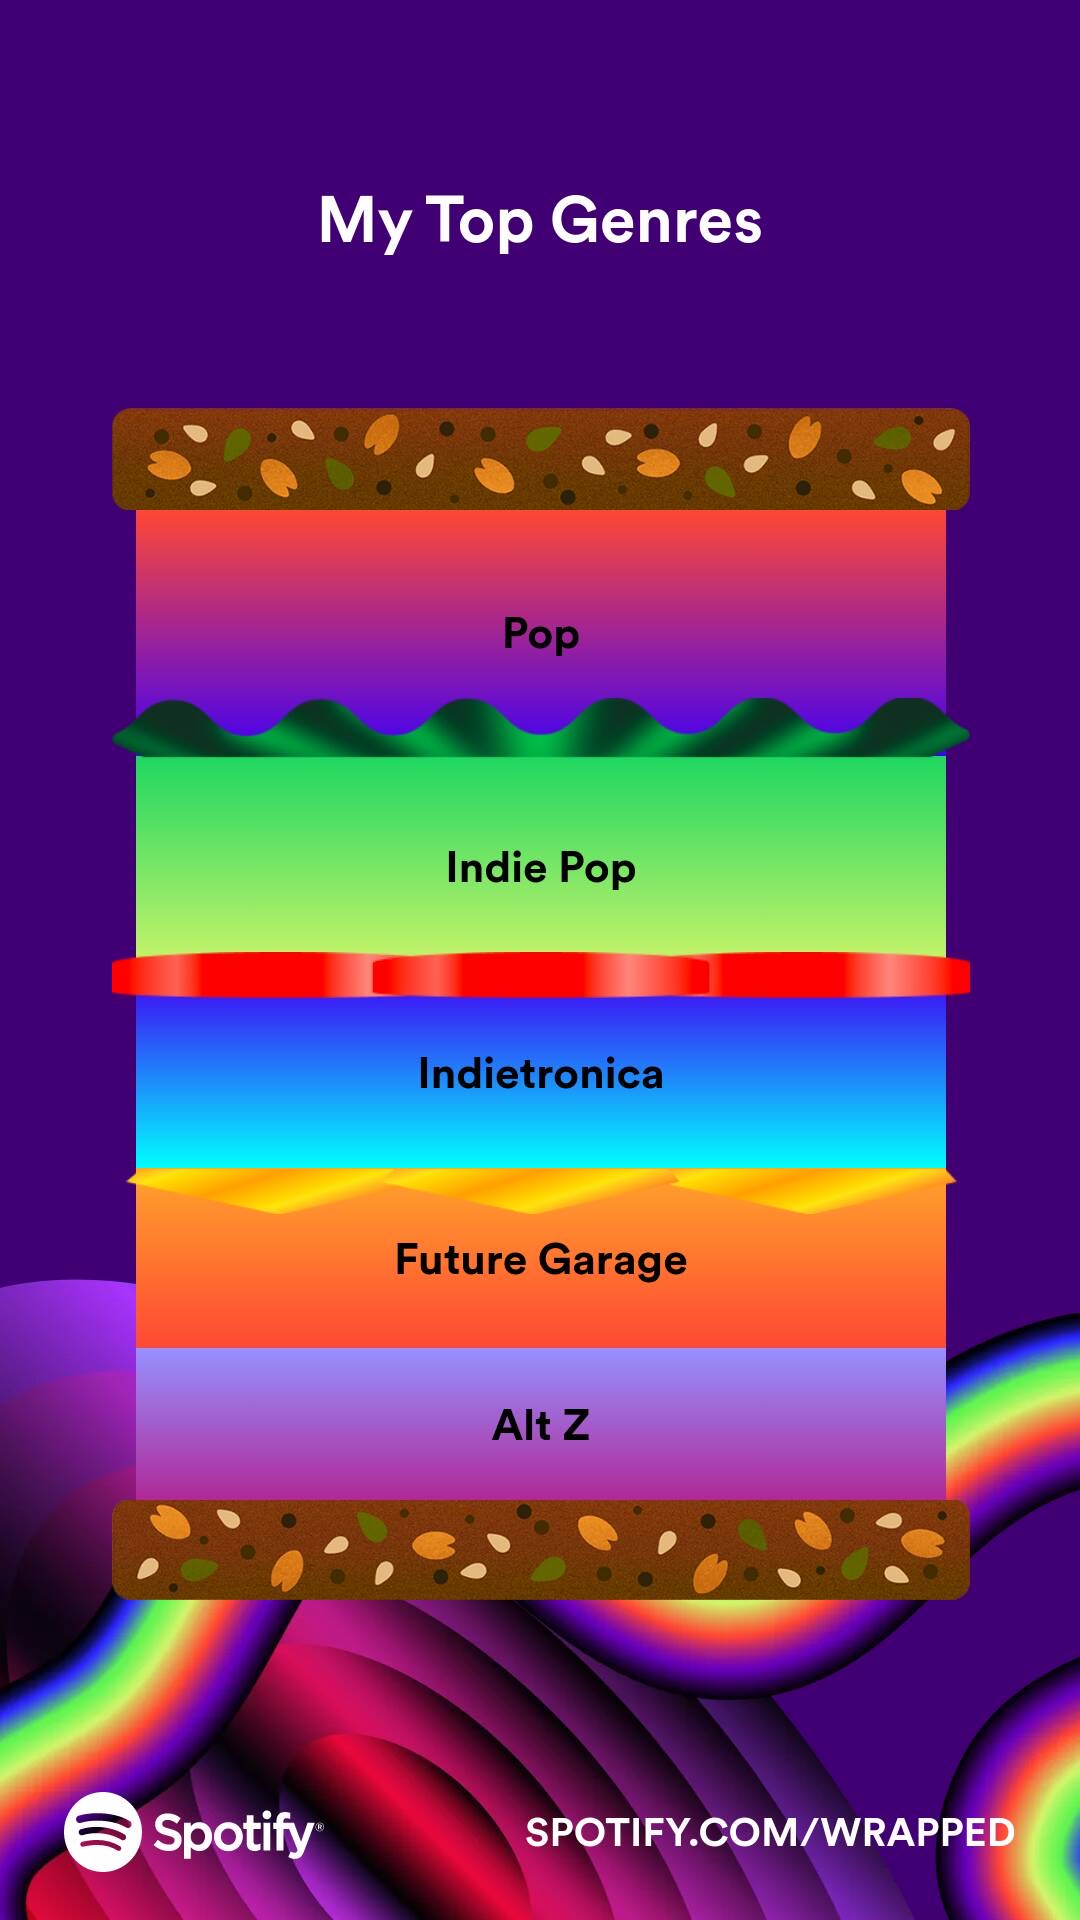 Neon sandwich visualization showing my top 5 genres, pop, indie pop, indietronica, future garage, and alt z.